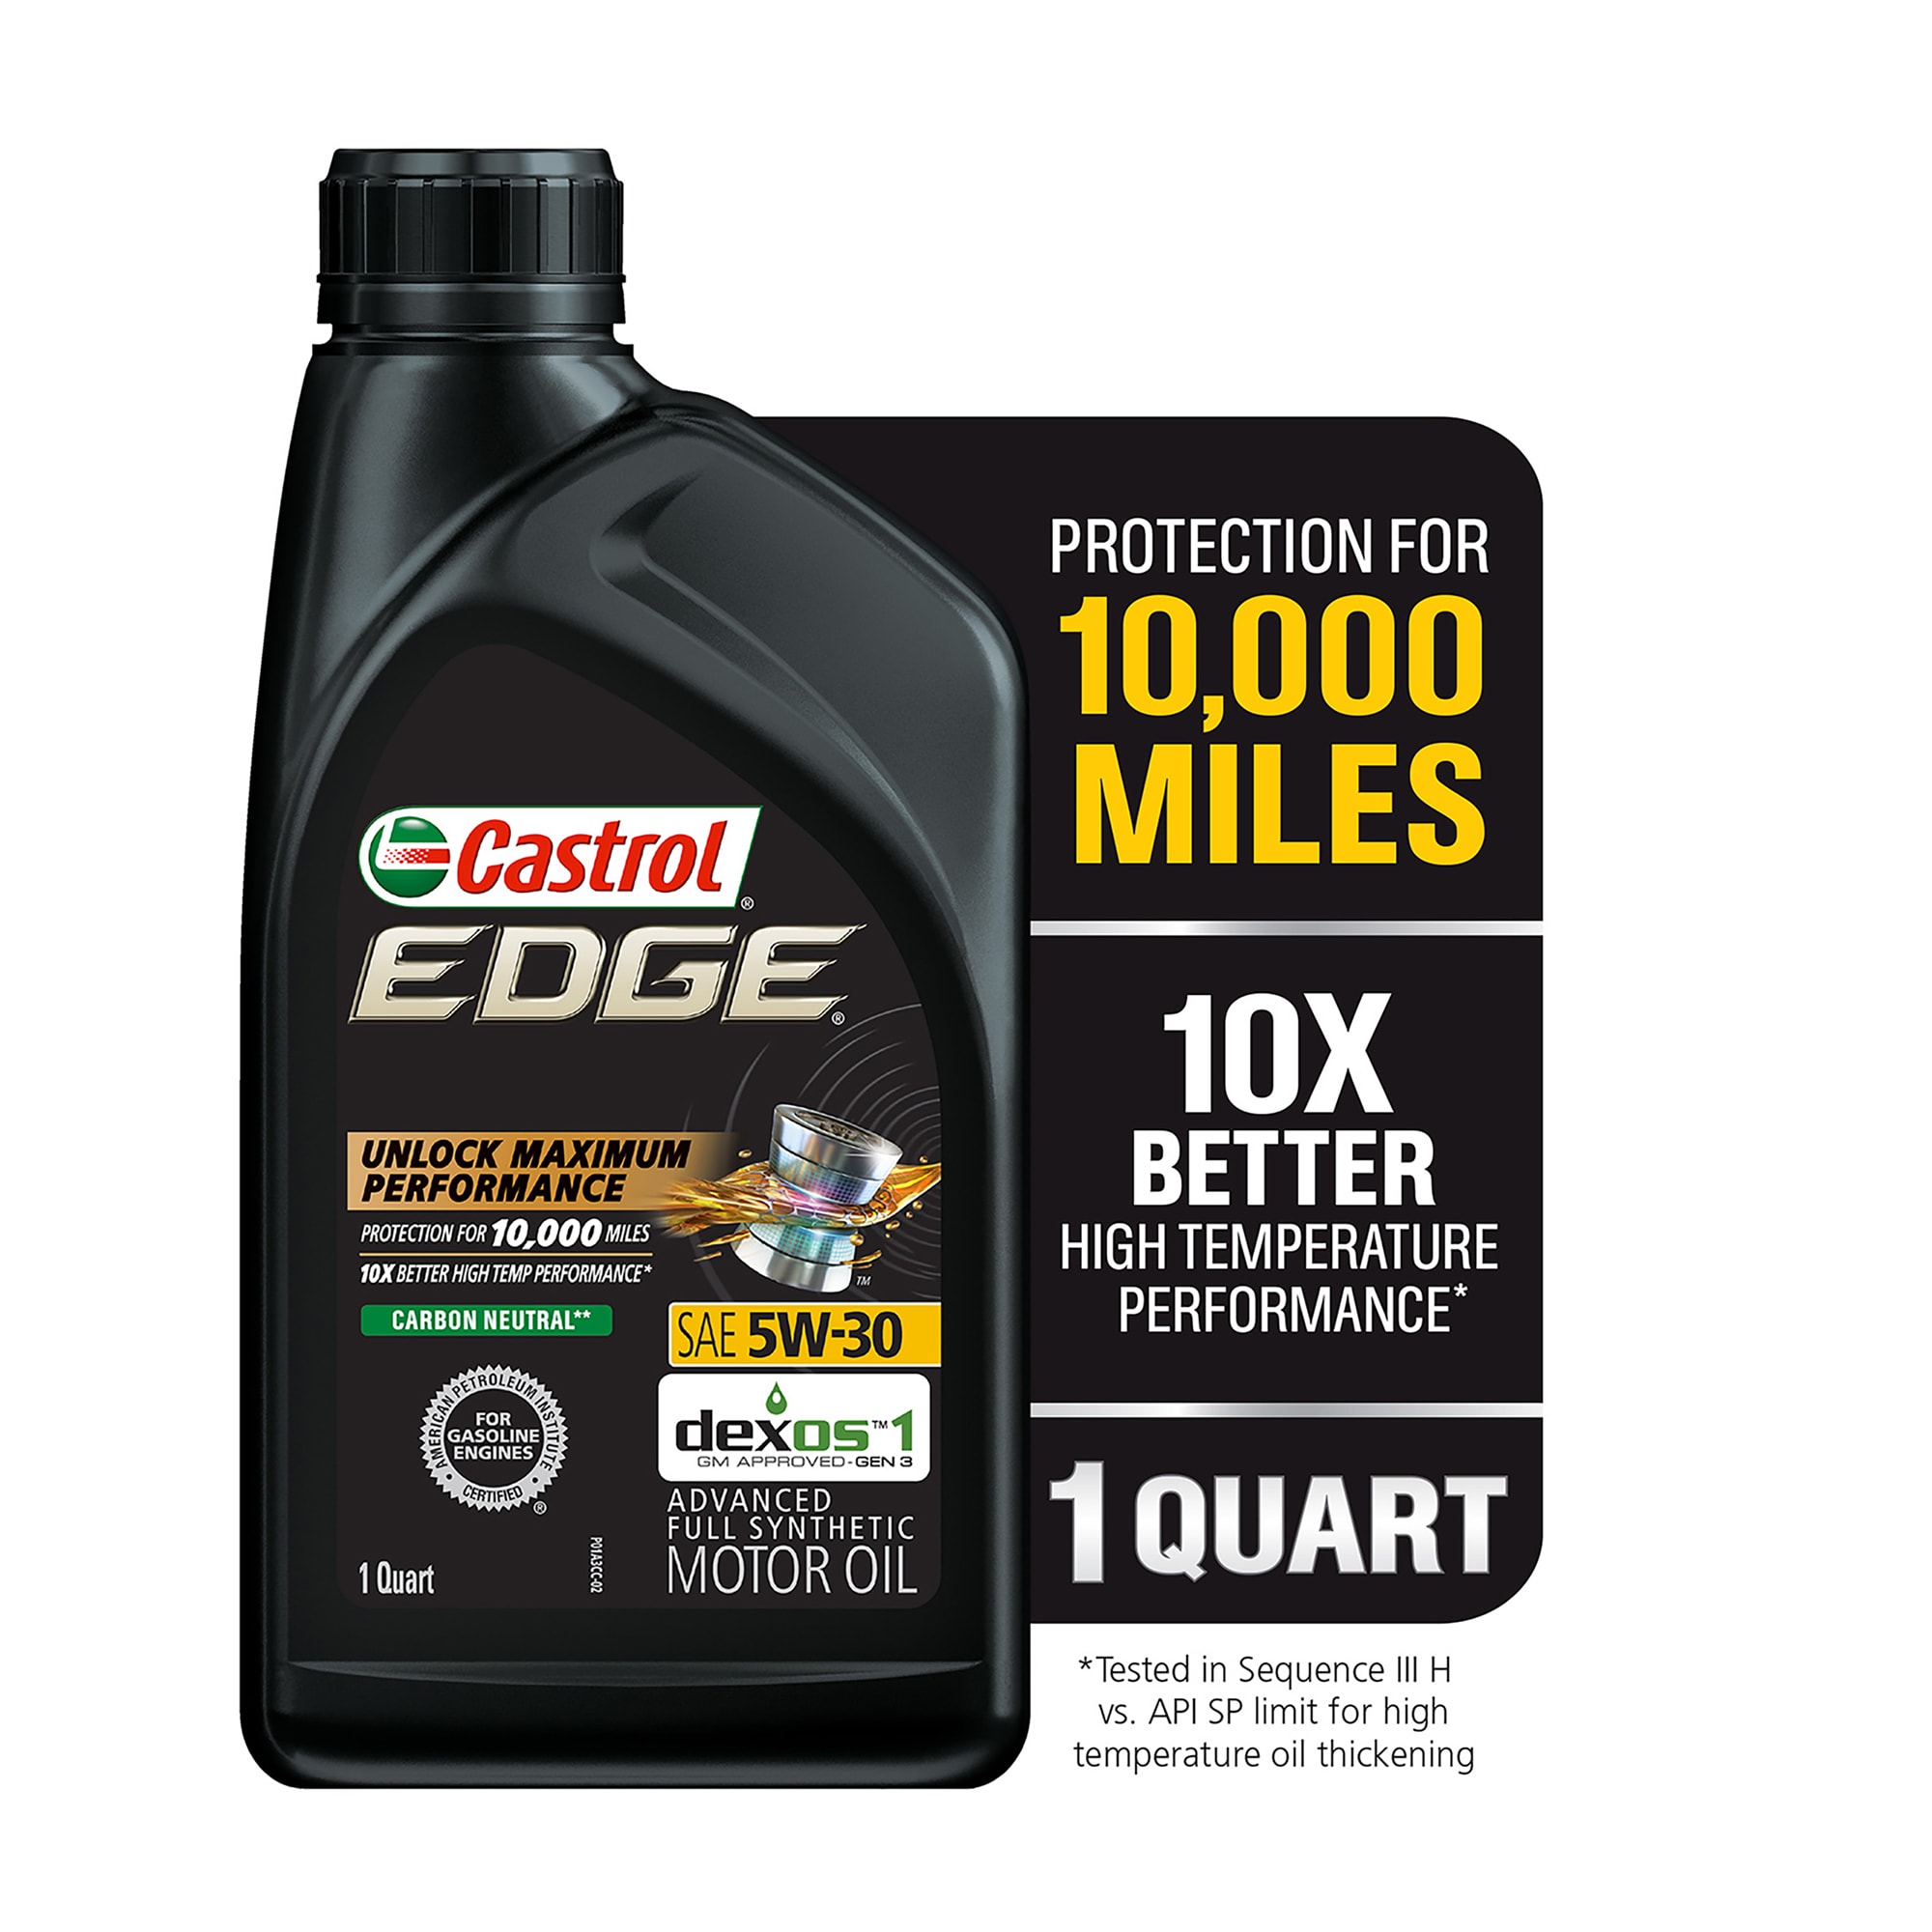 Castrol Edge SAE 5W-40 Full Synthetic Motor Oil (6 Quarts)